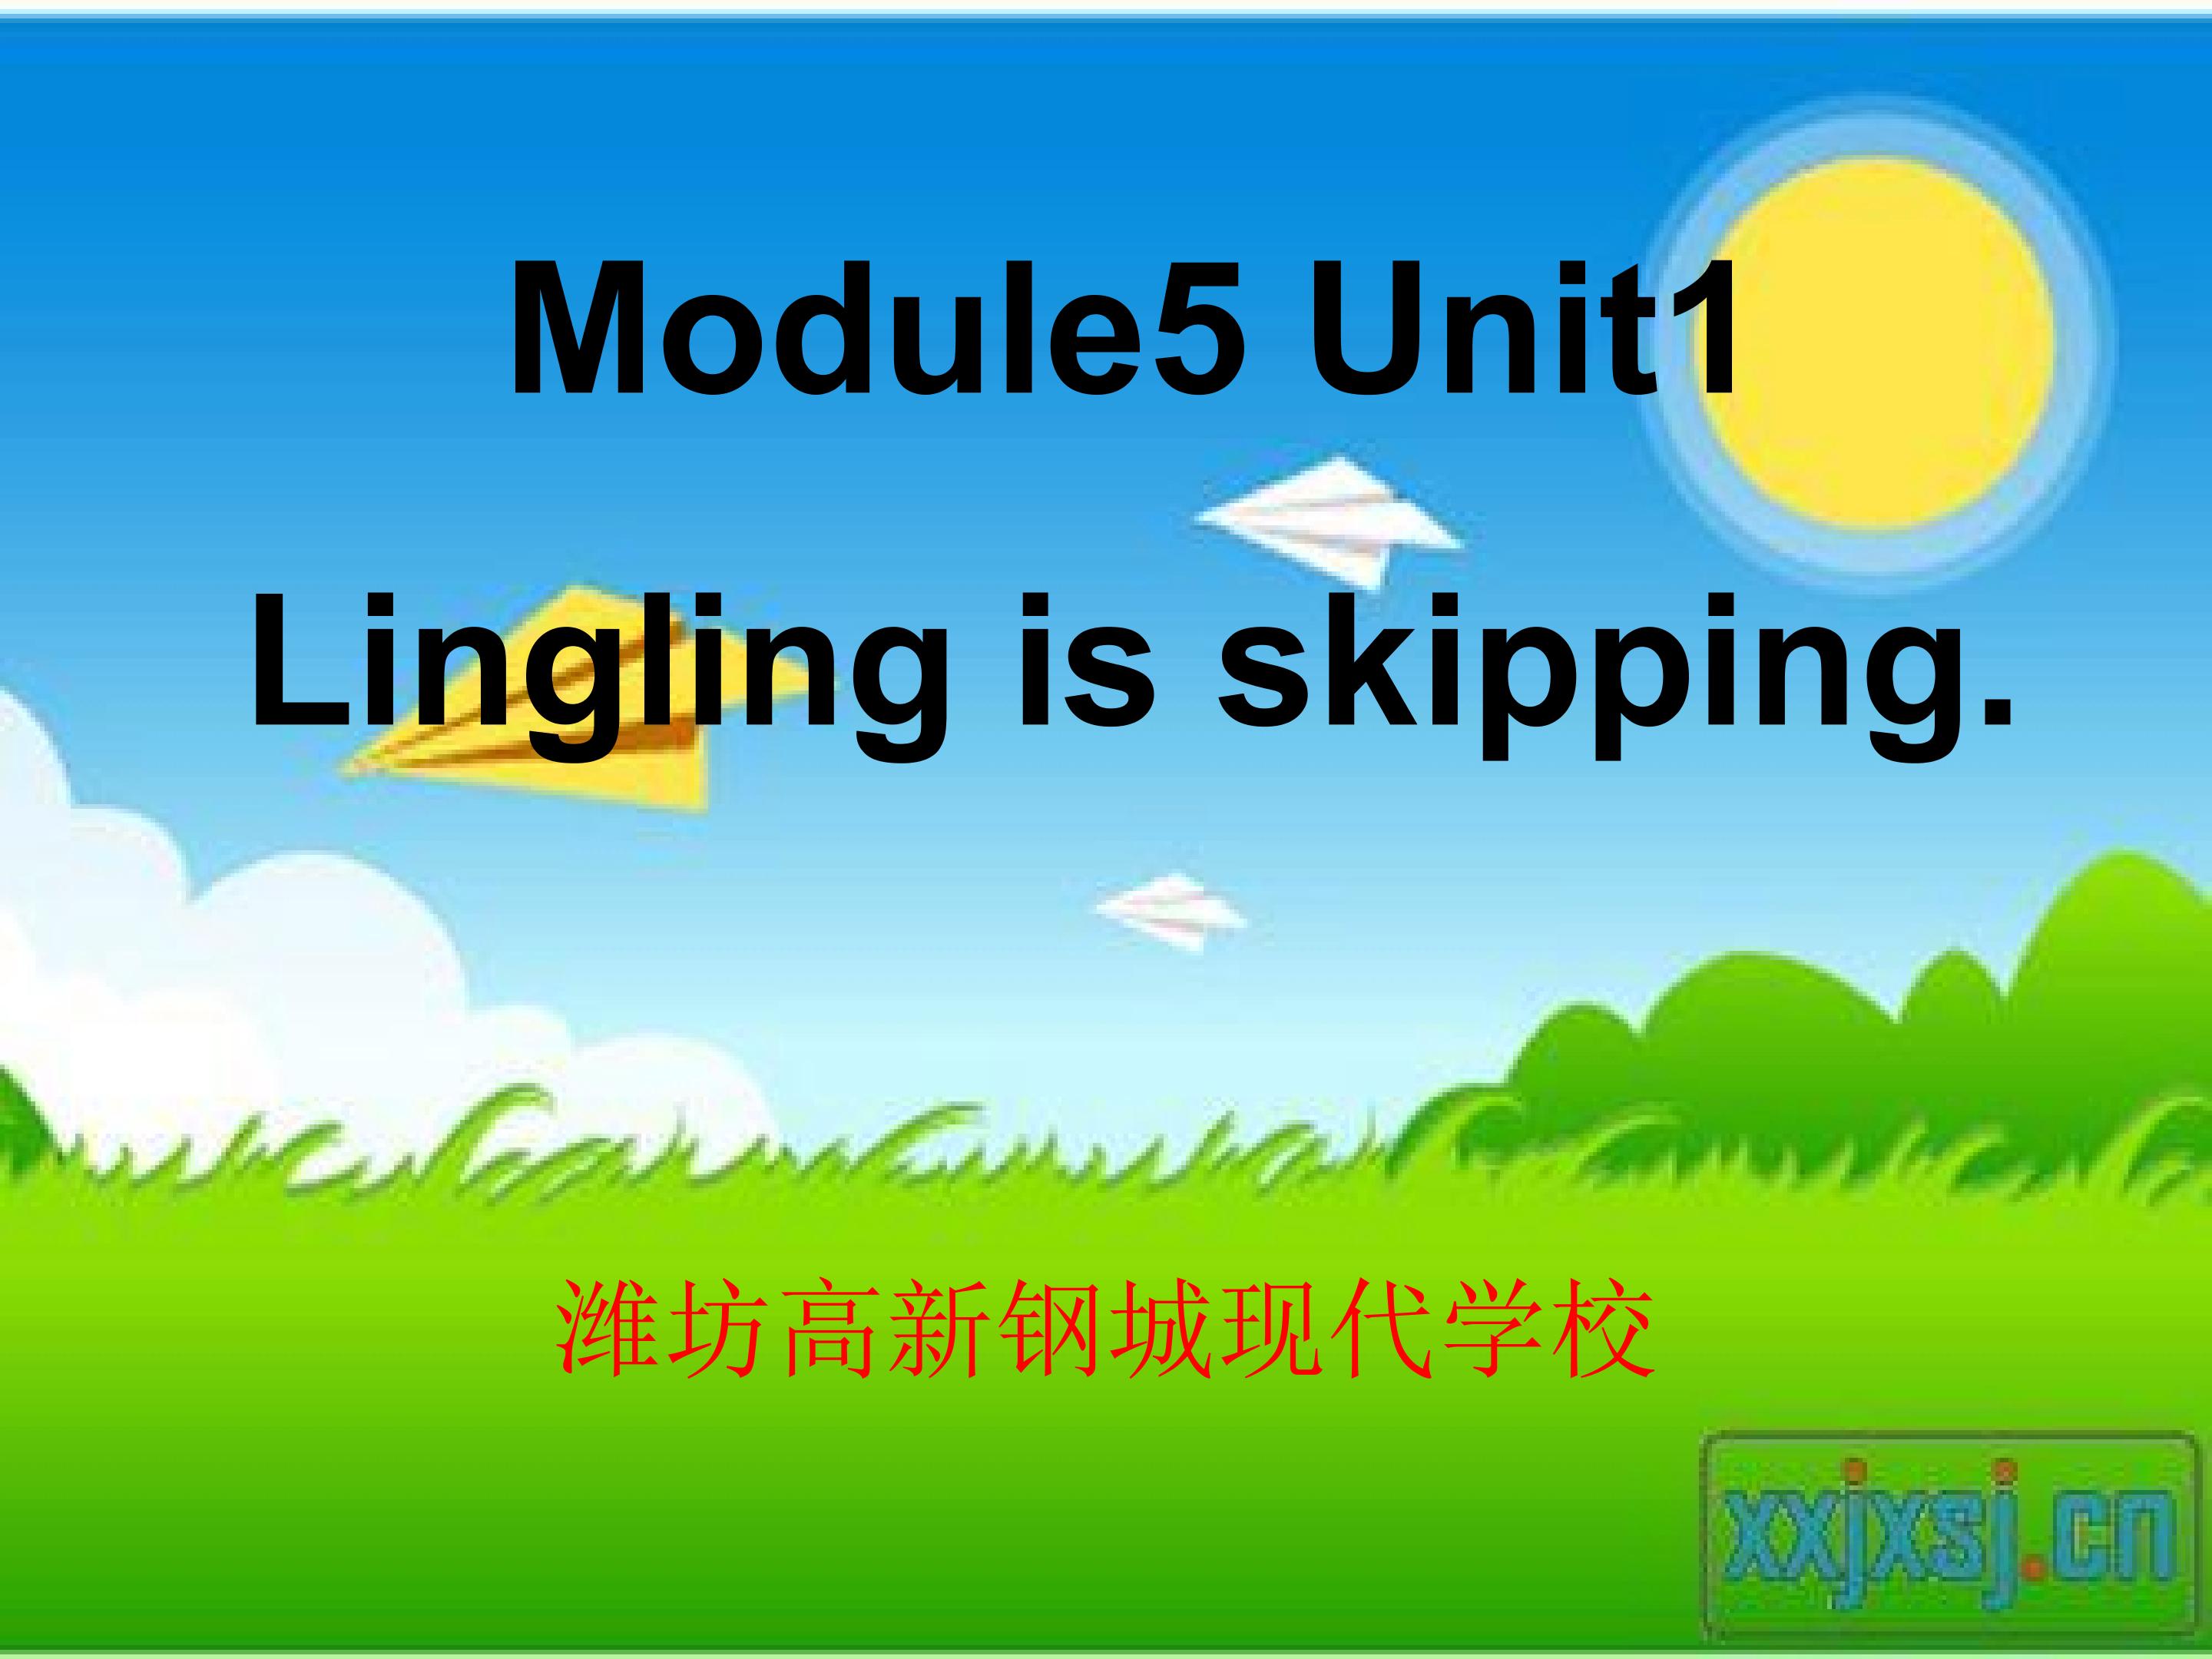 Module5 unit1Lingling is skipping.